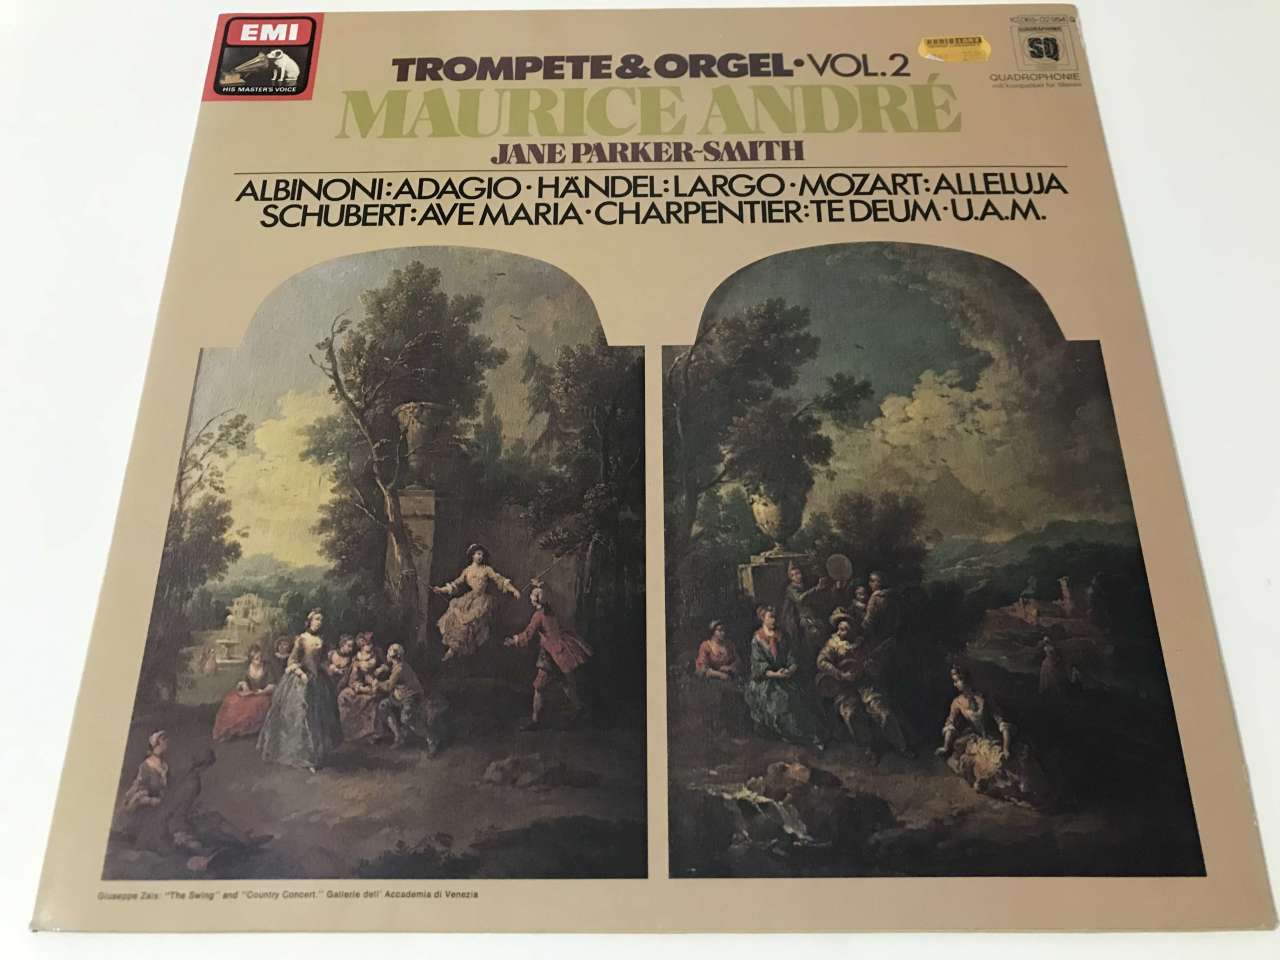 Maurice André, Jane Parker-Smith ‎– Trompete & Orgel Vol. 2